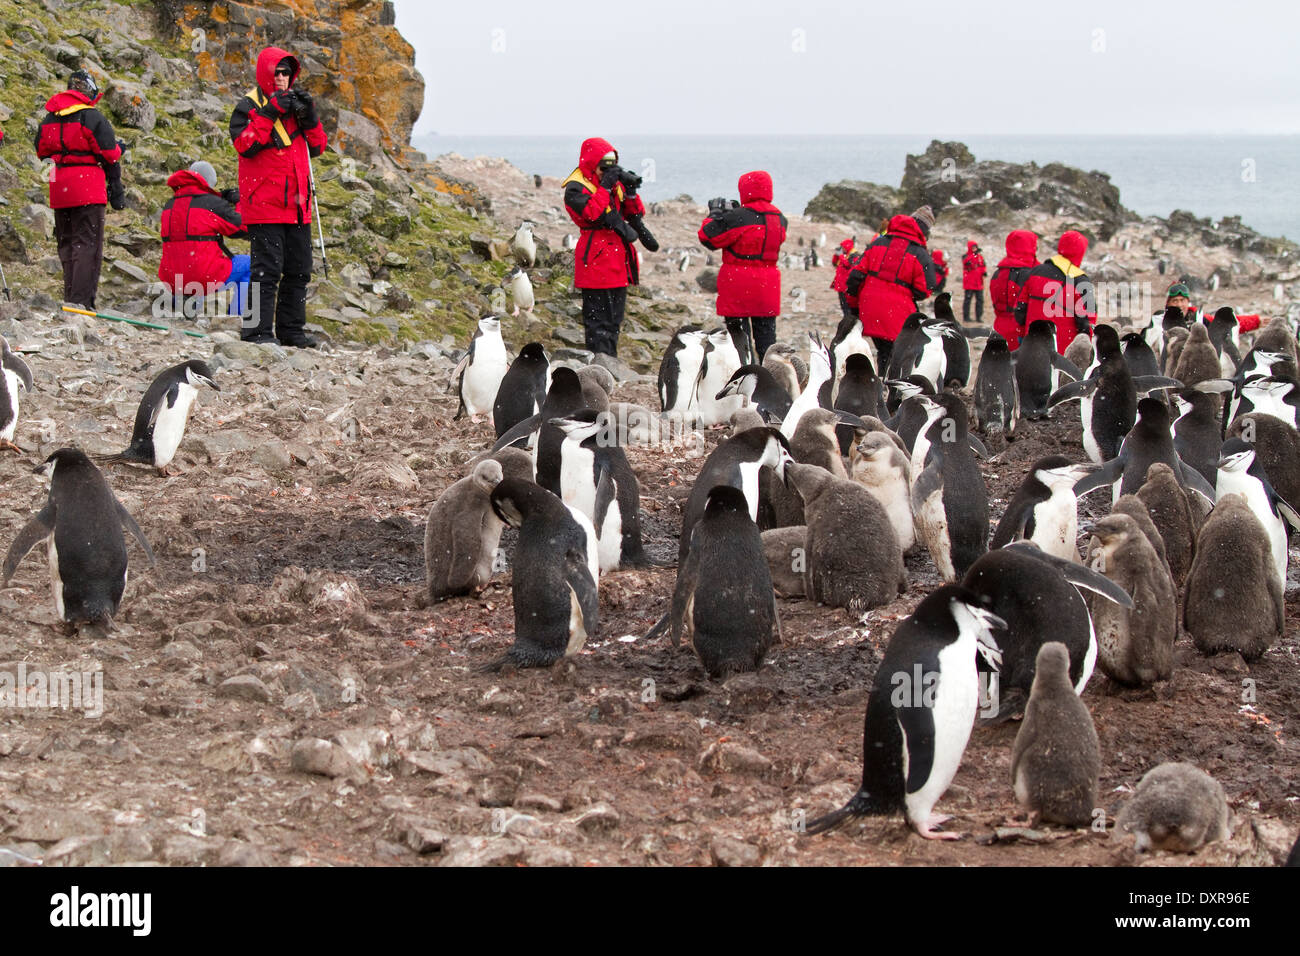 Antarctica tourism, tourists and penguin, penguins among the Antarctica landscape. Stock Photo